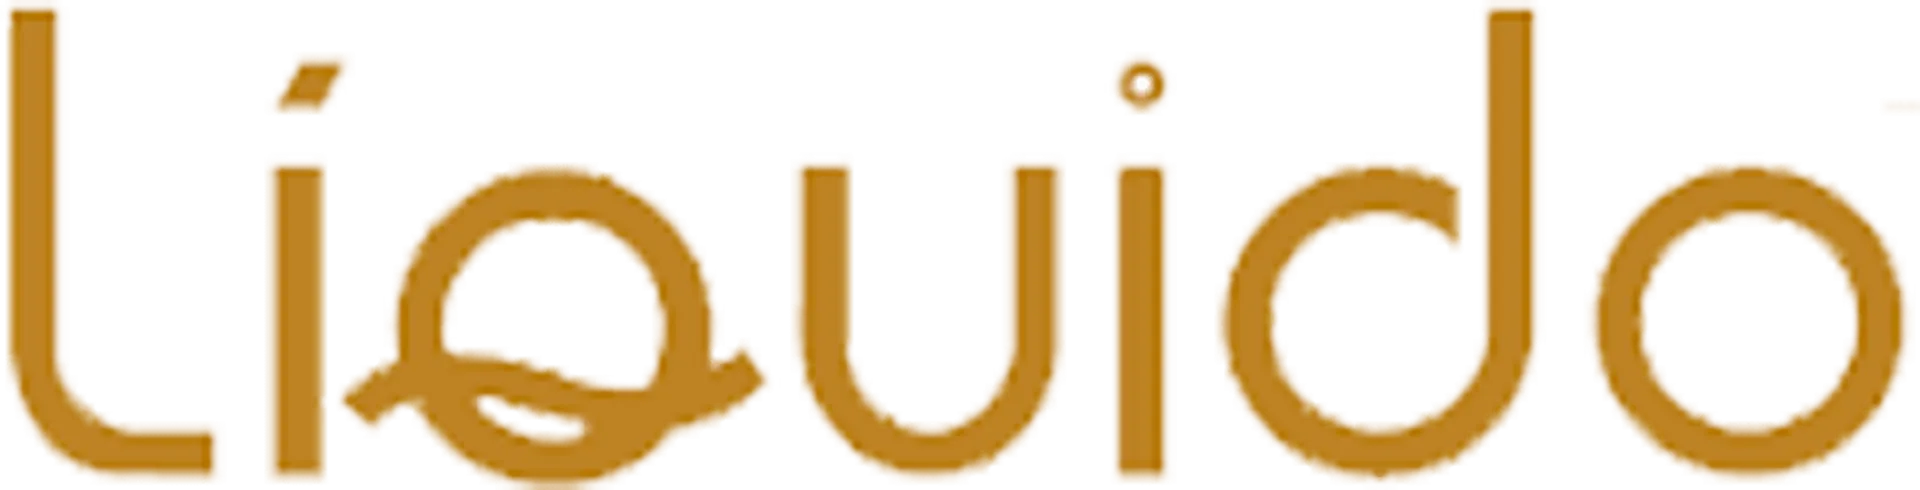 LÍQUIDO logo